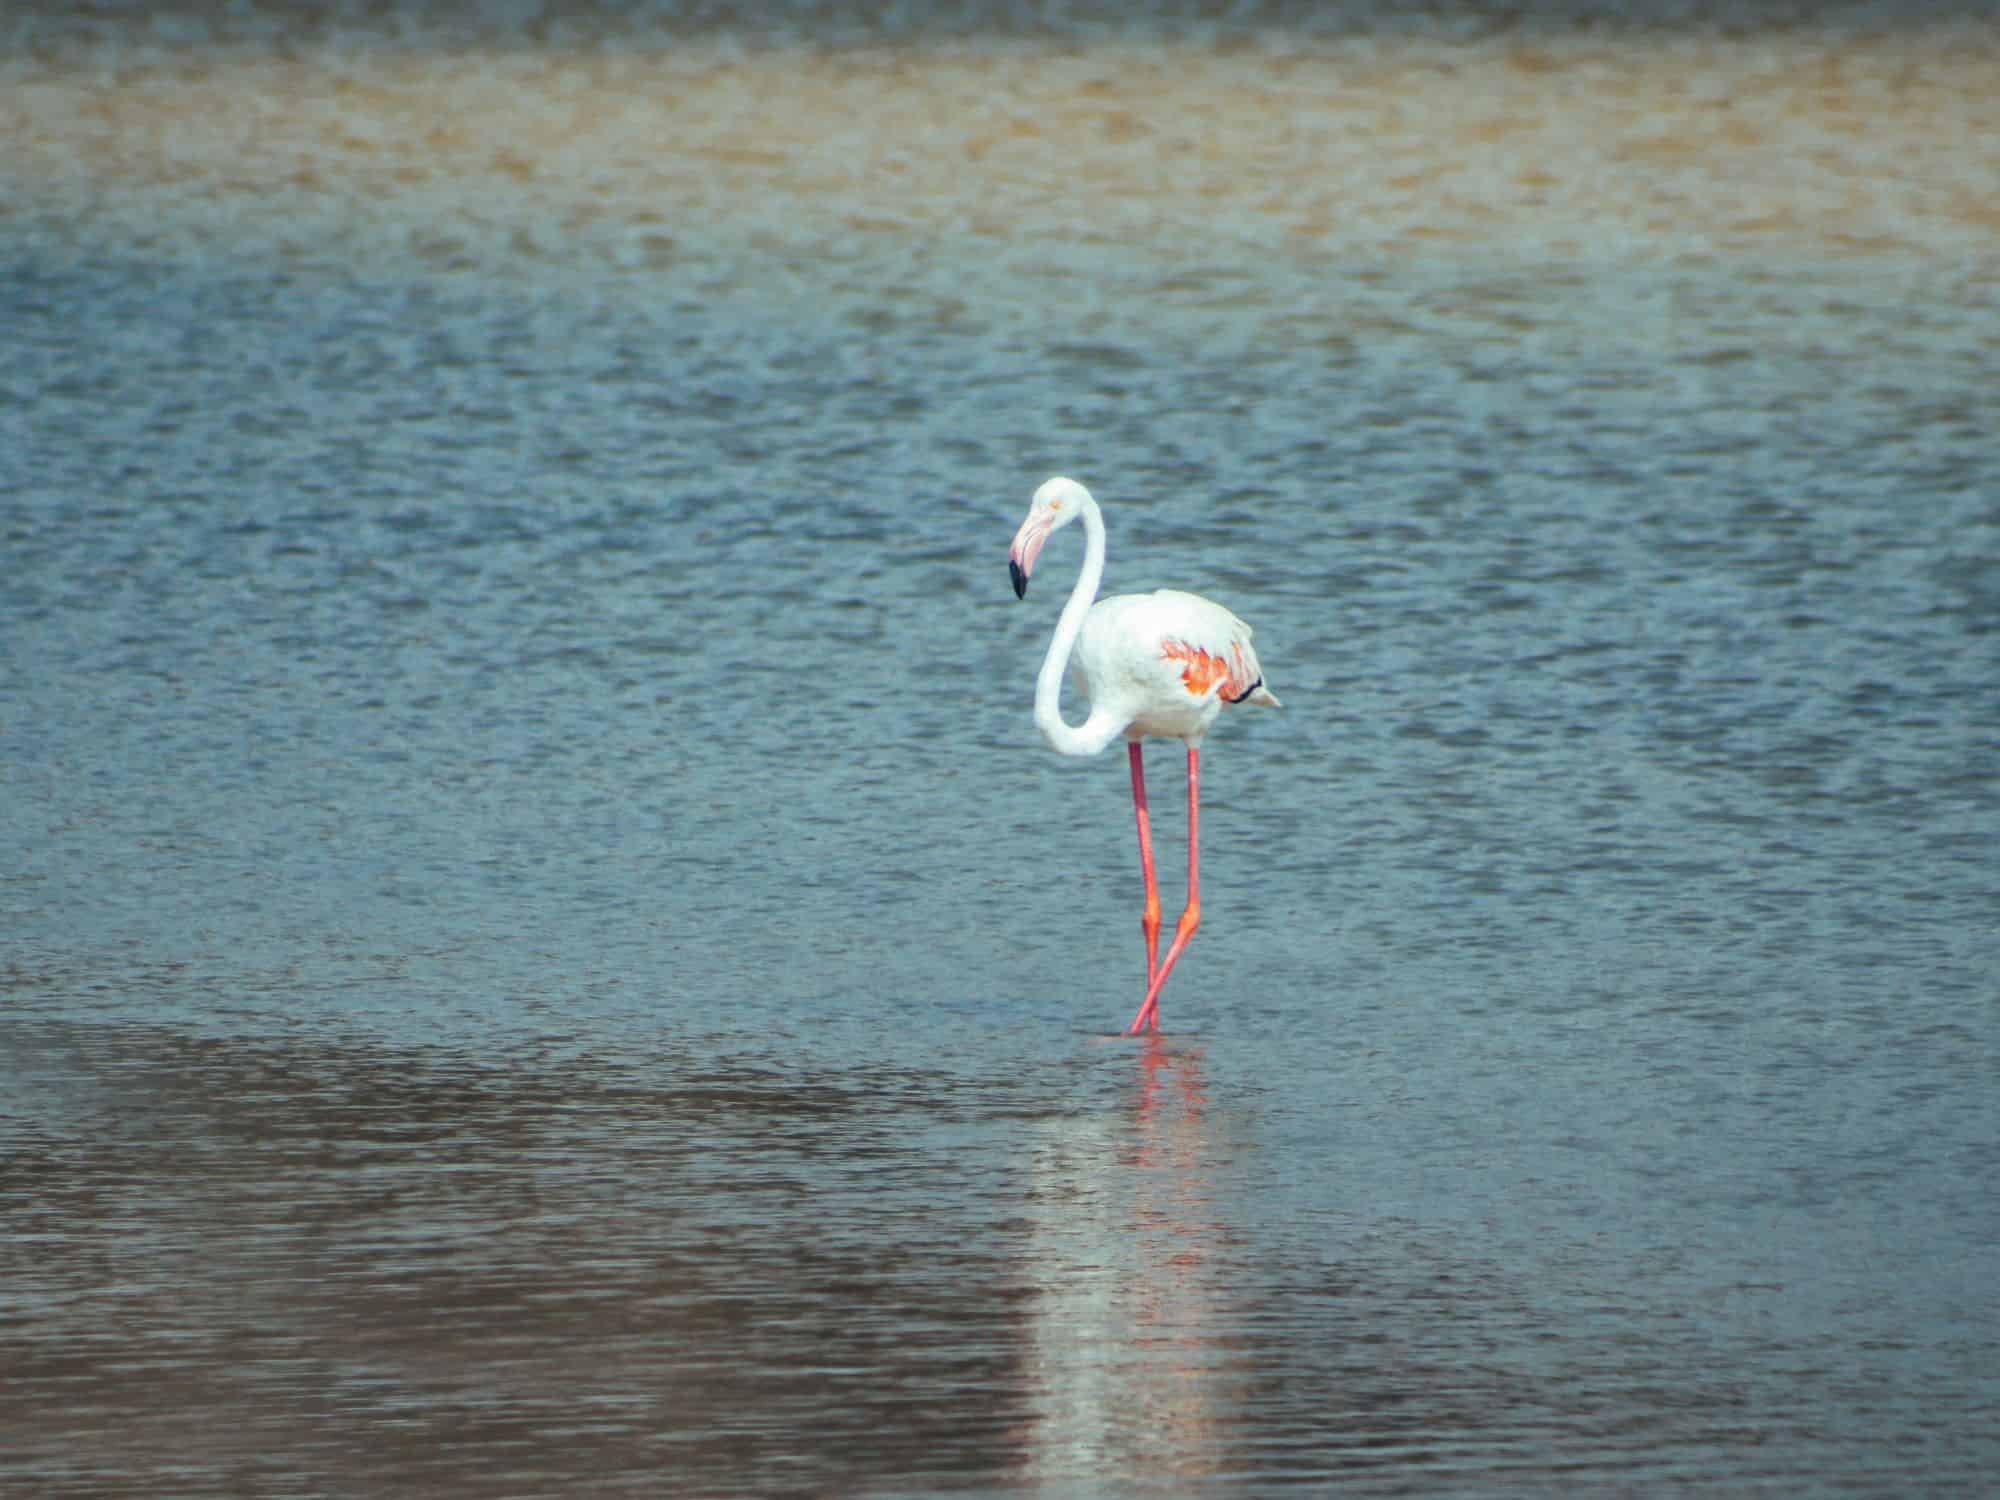 Best hidden gems in Dubai - flamingo in water